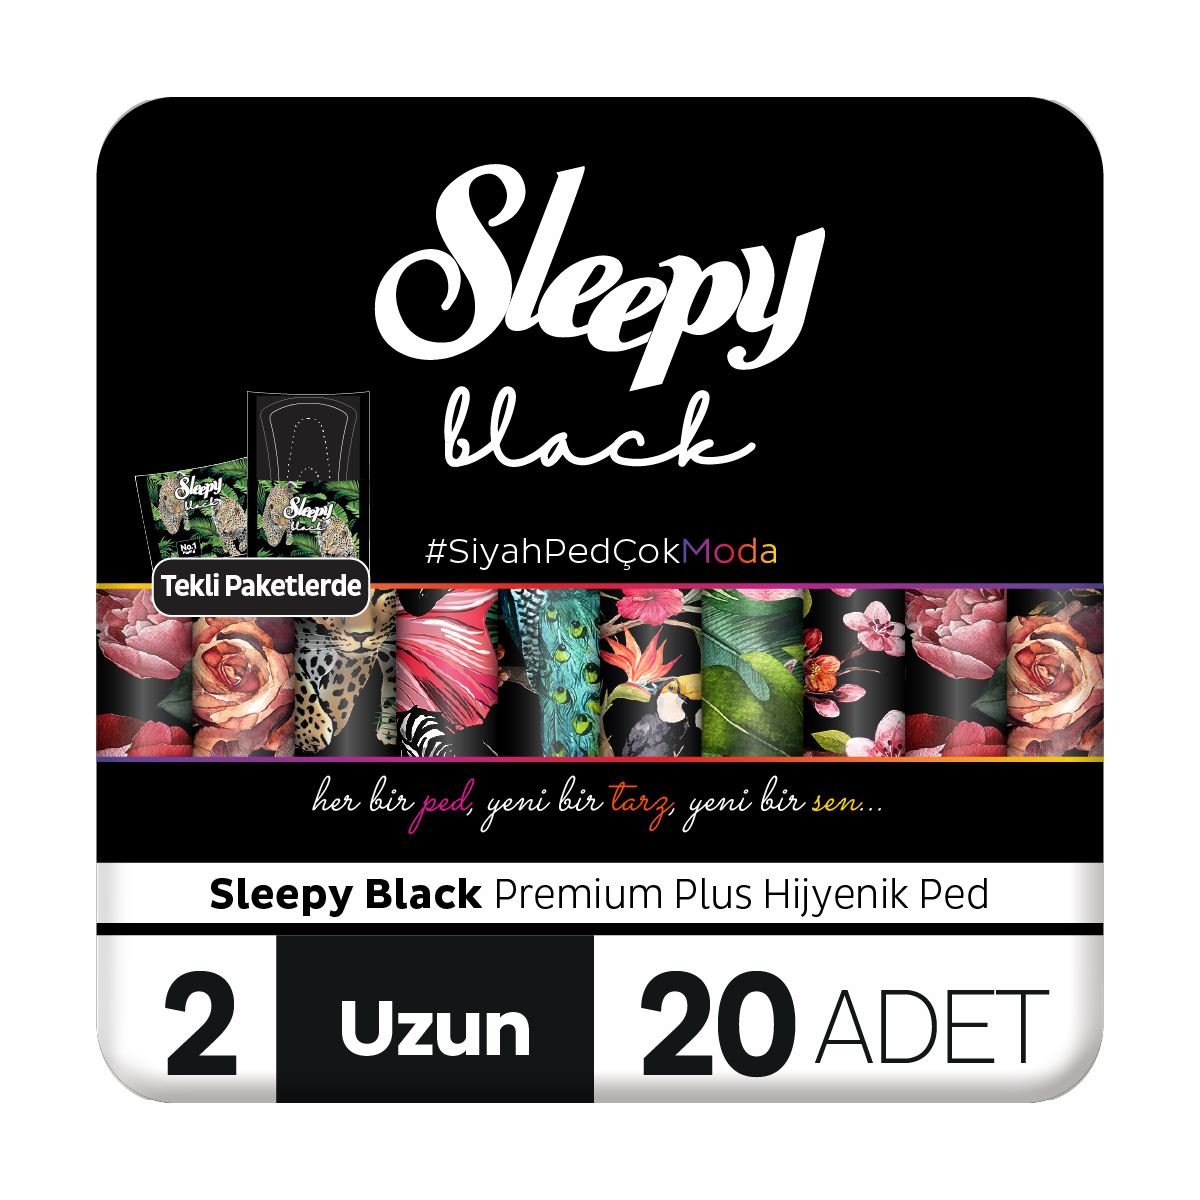 Sleepy Black Premium Plus Hijyenik Ped Uzun 20 Adet Ped